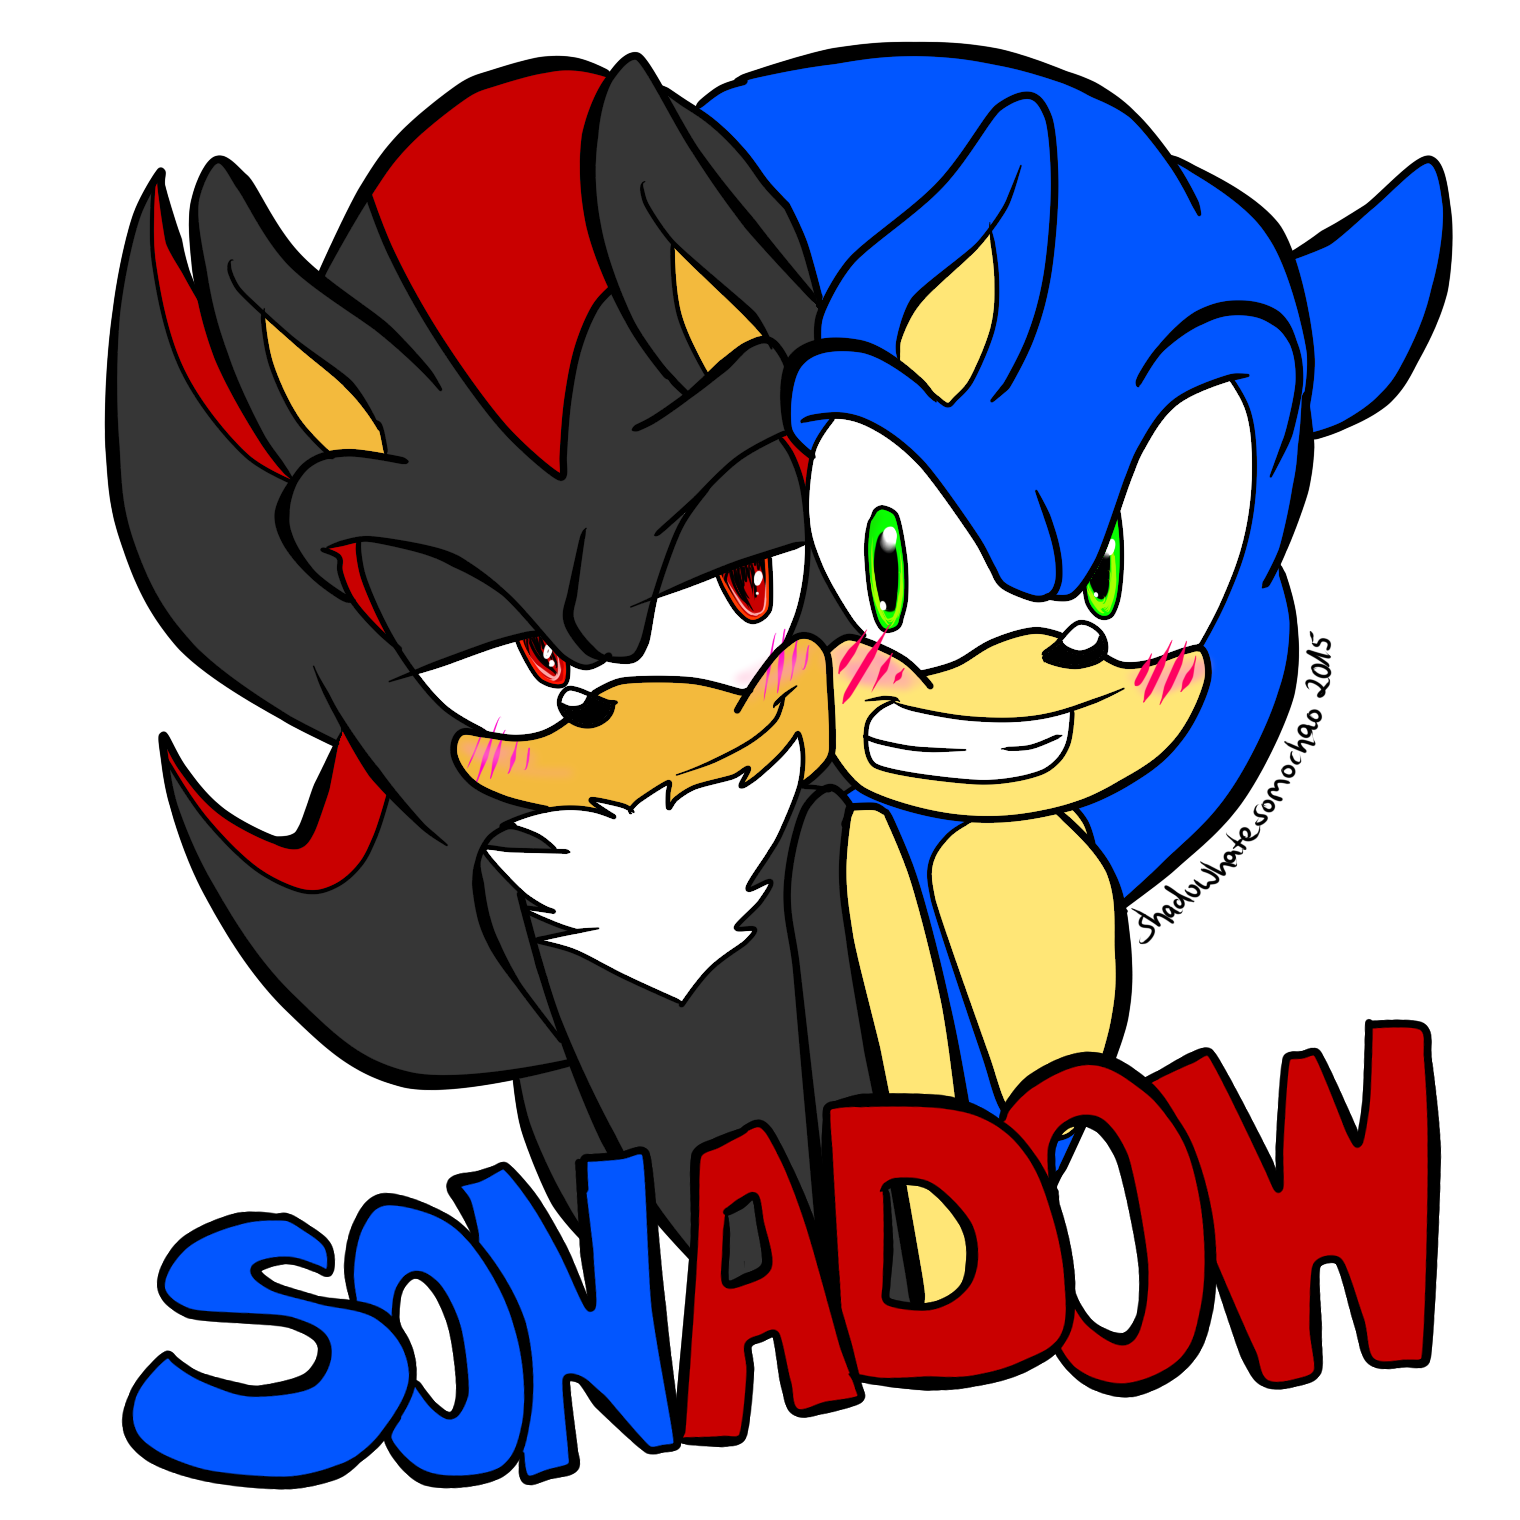 Shadow love Sonic, Sonadow Ship